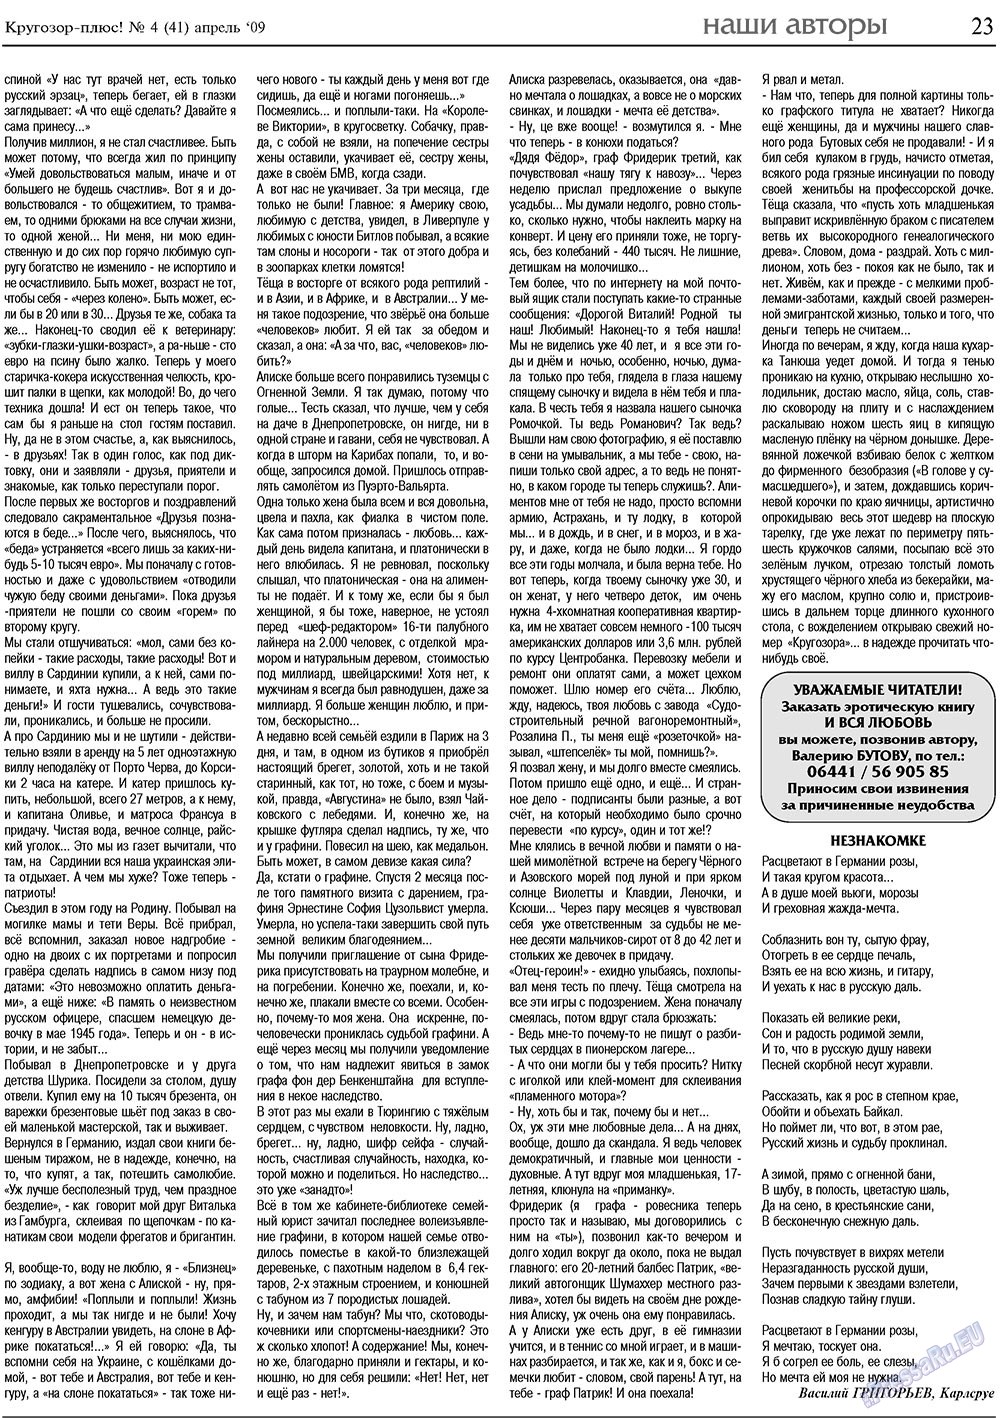 Кругозор плюс! (газета). 2009 год, номер 4, стр. 23